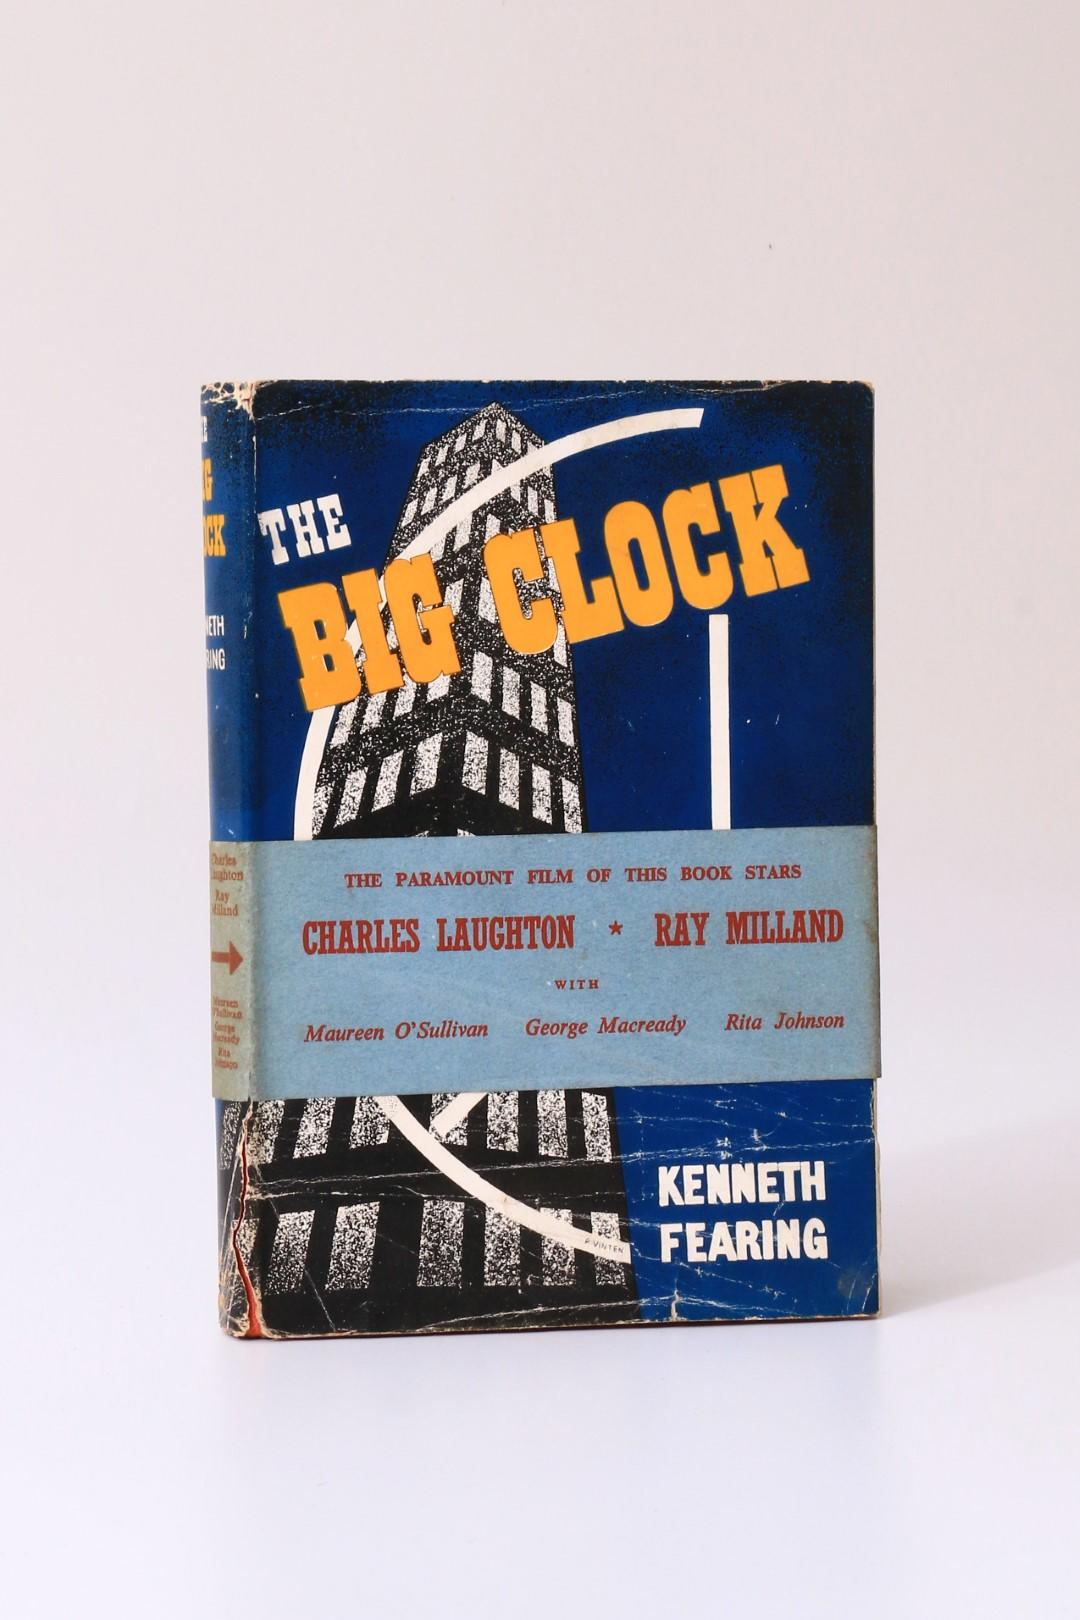 Kenneth Fearing - The Big Clock - Bodley Head, 1947, First Edition.